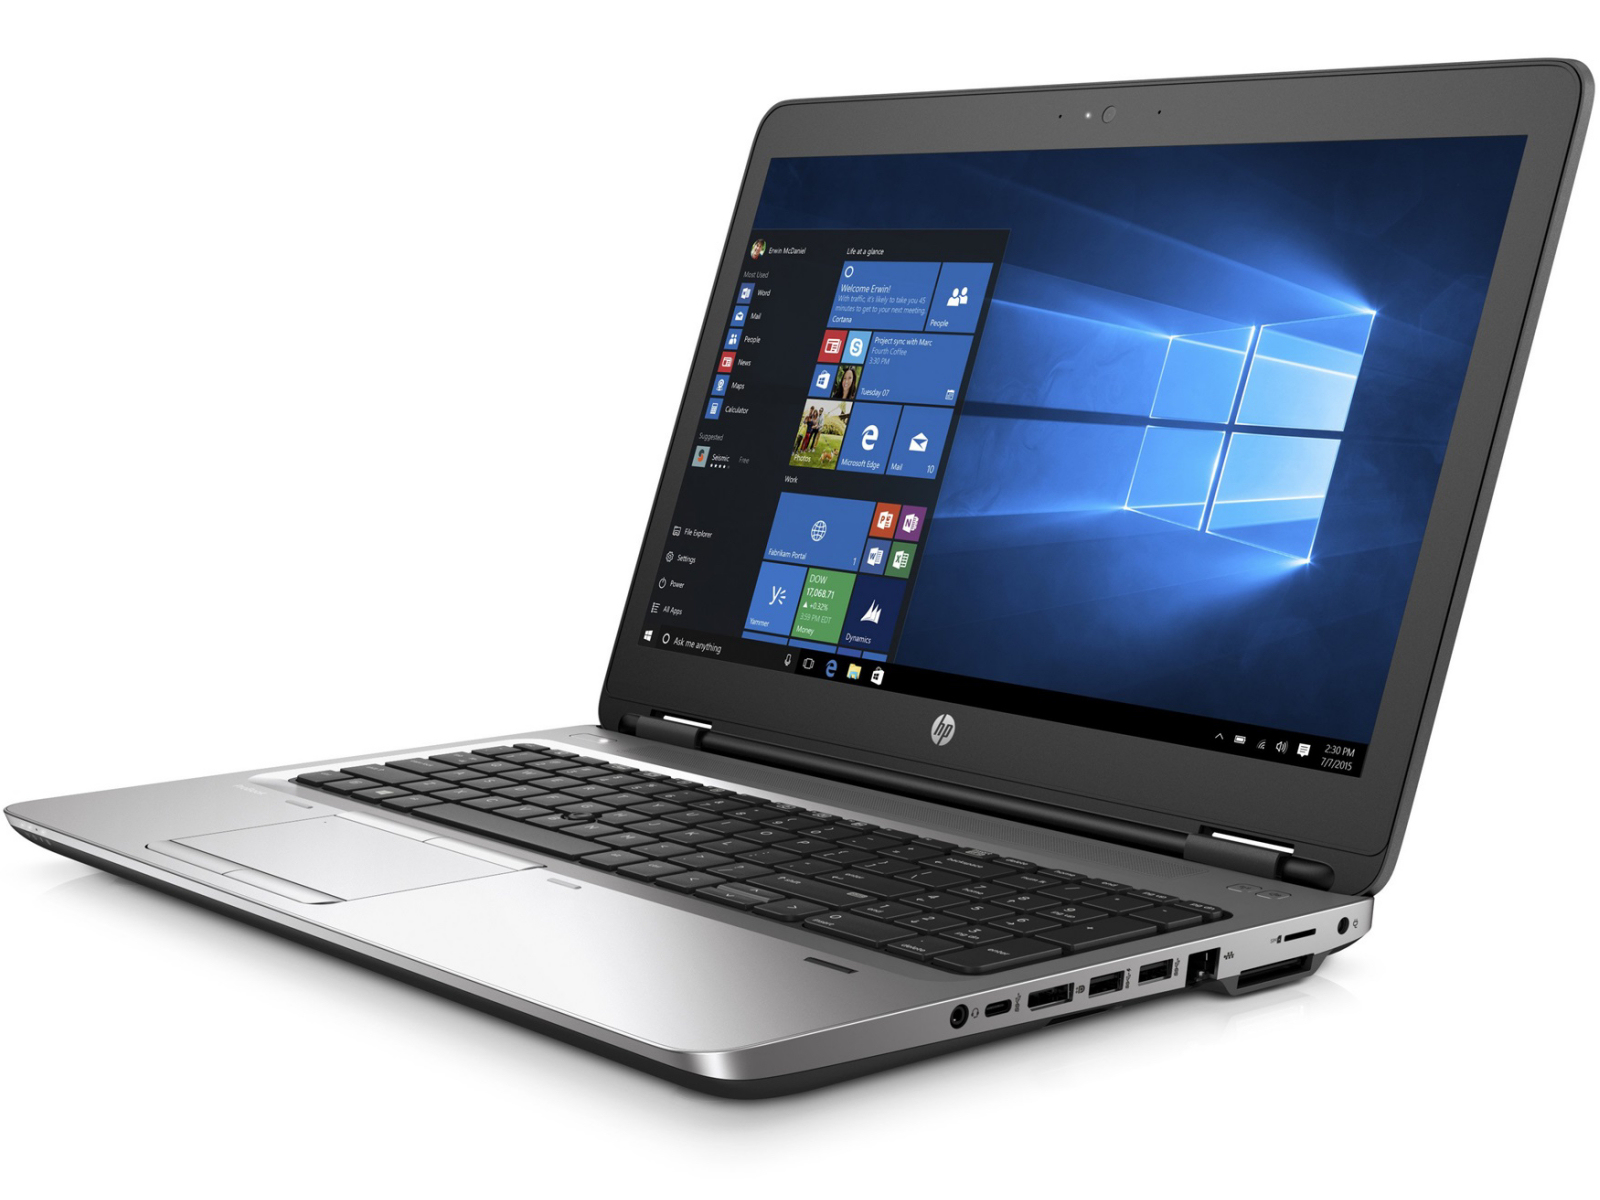 HP ProBook 650 G2 Specifications